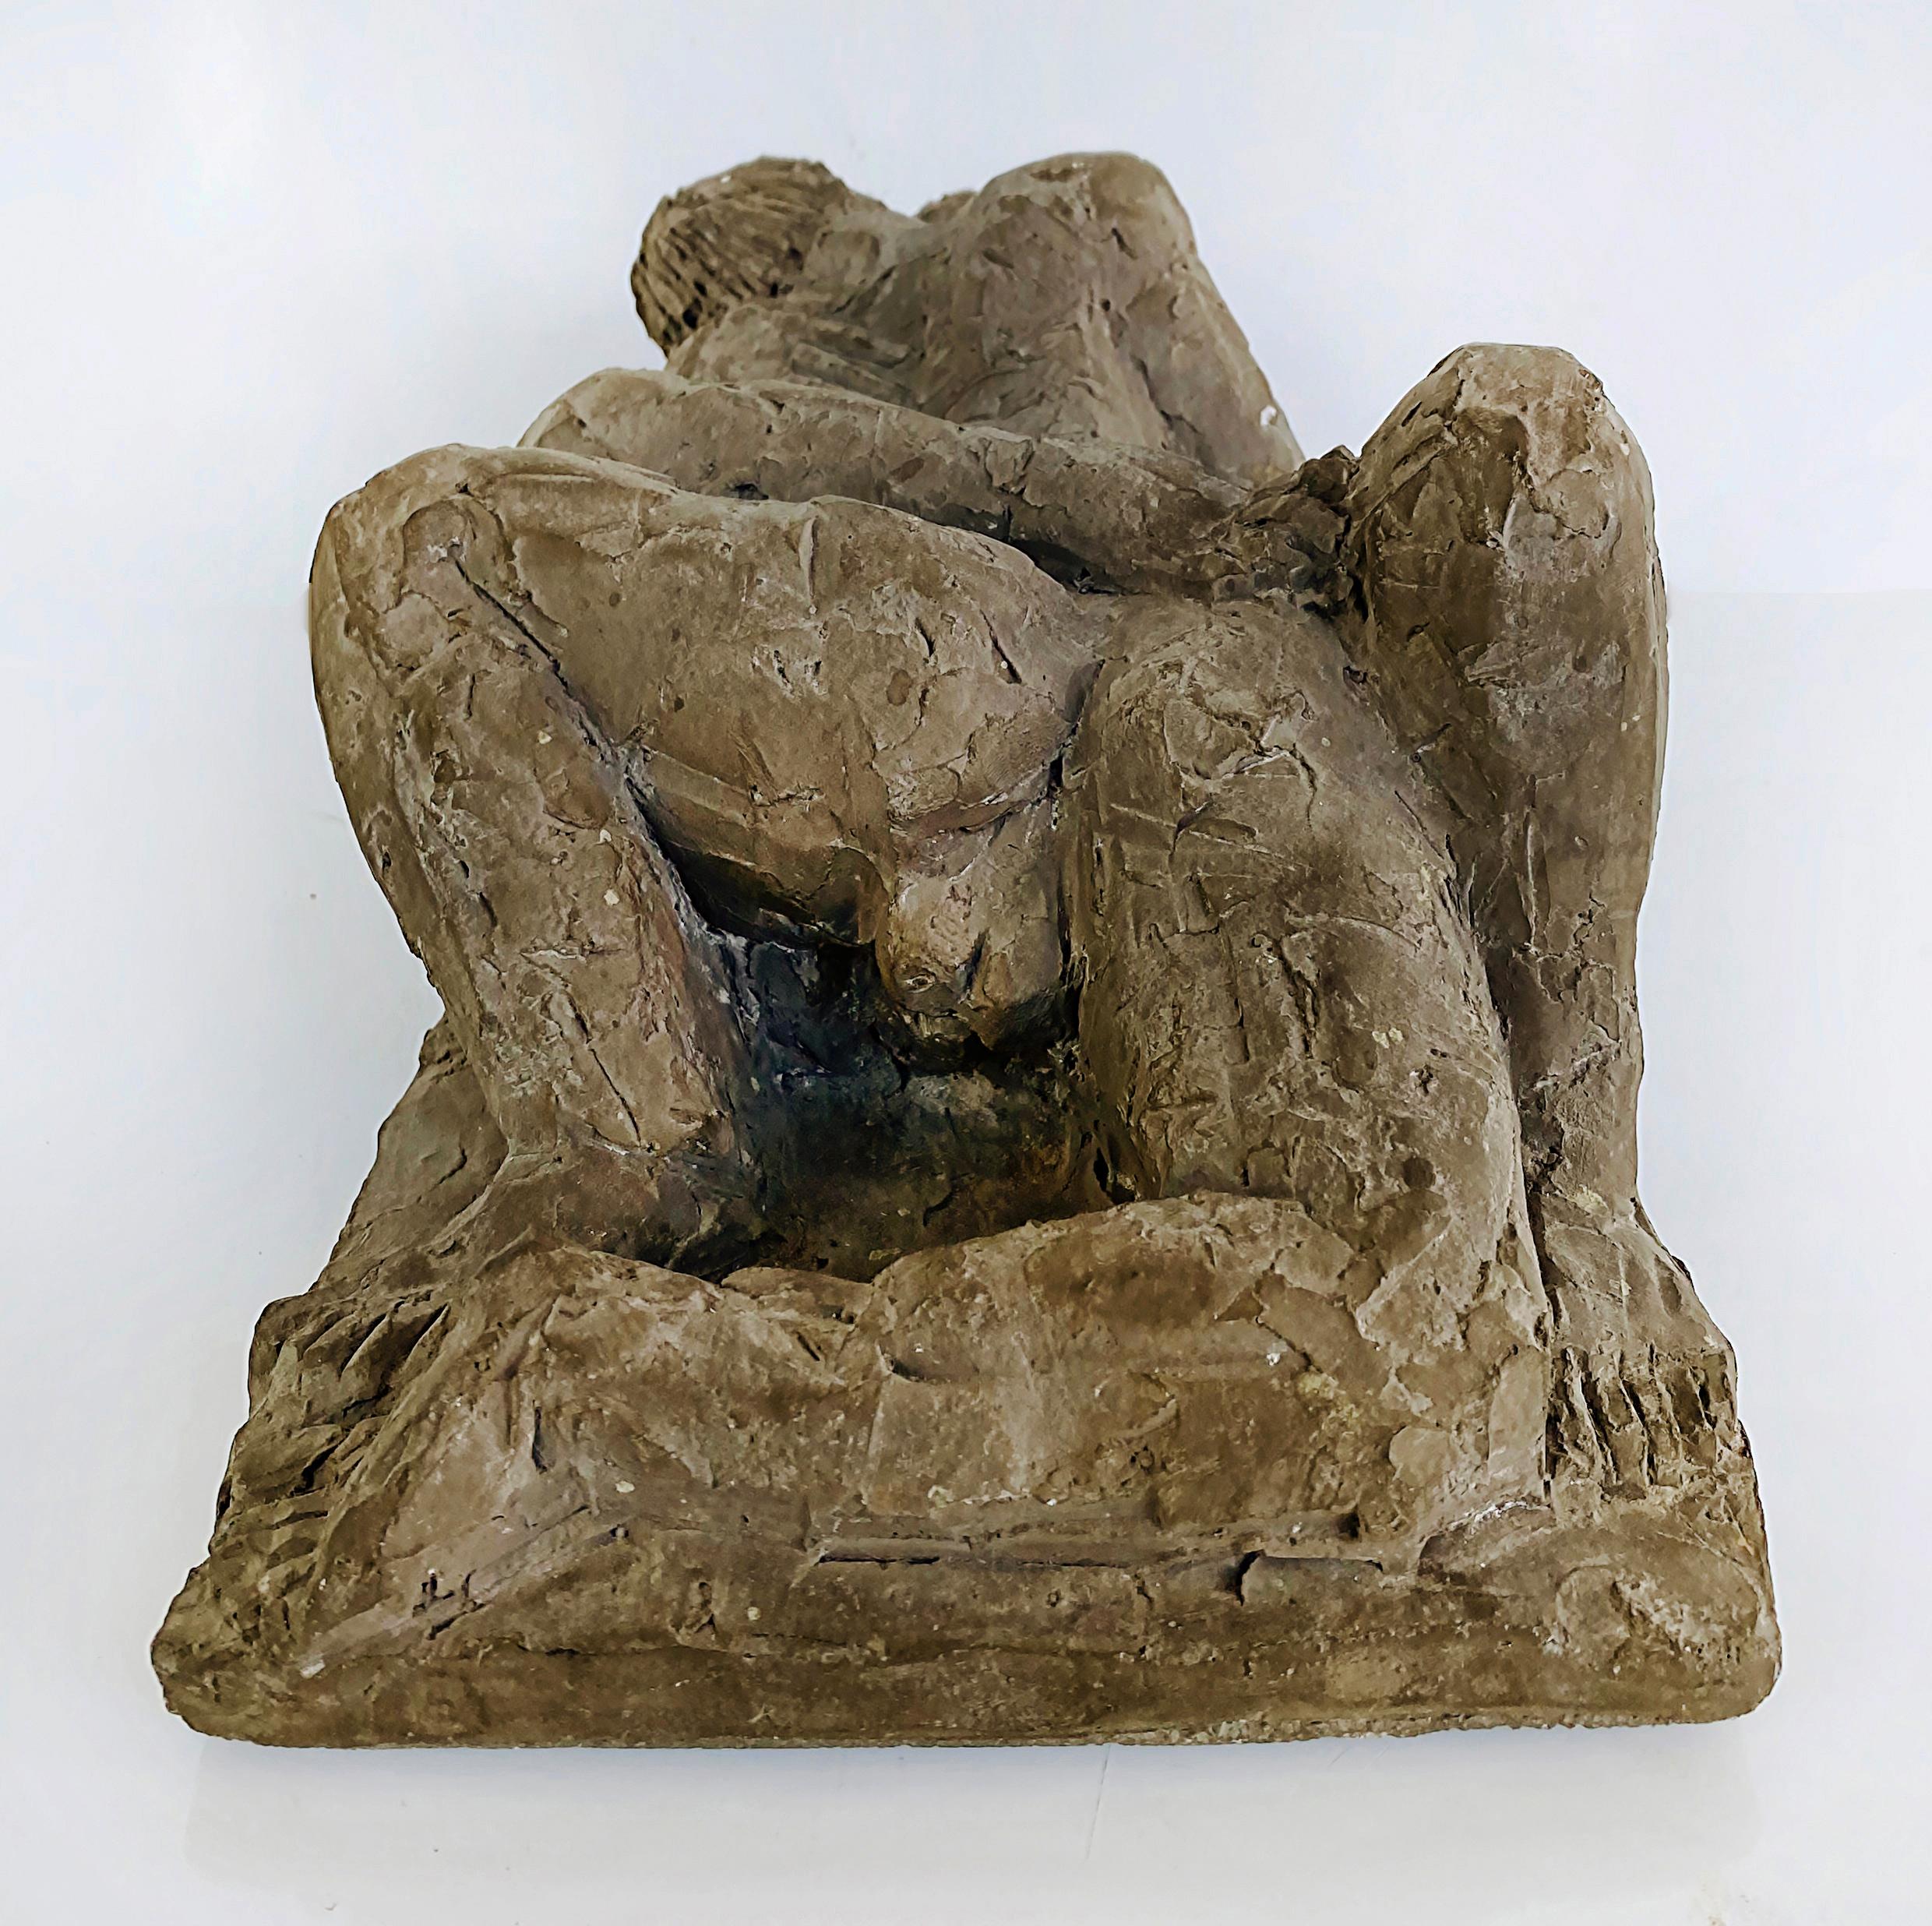  Original Chuck Dodson Erotische Figurative Skulptur circa 1975, 